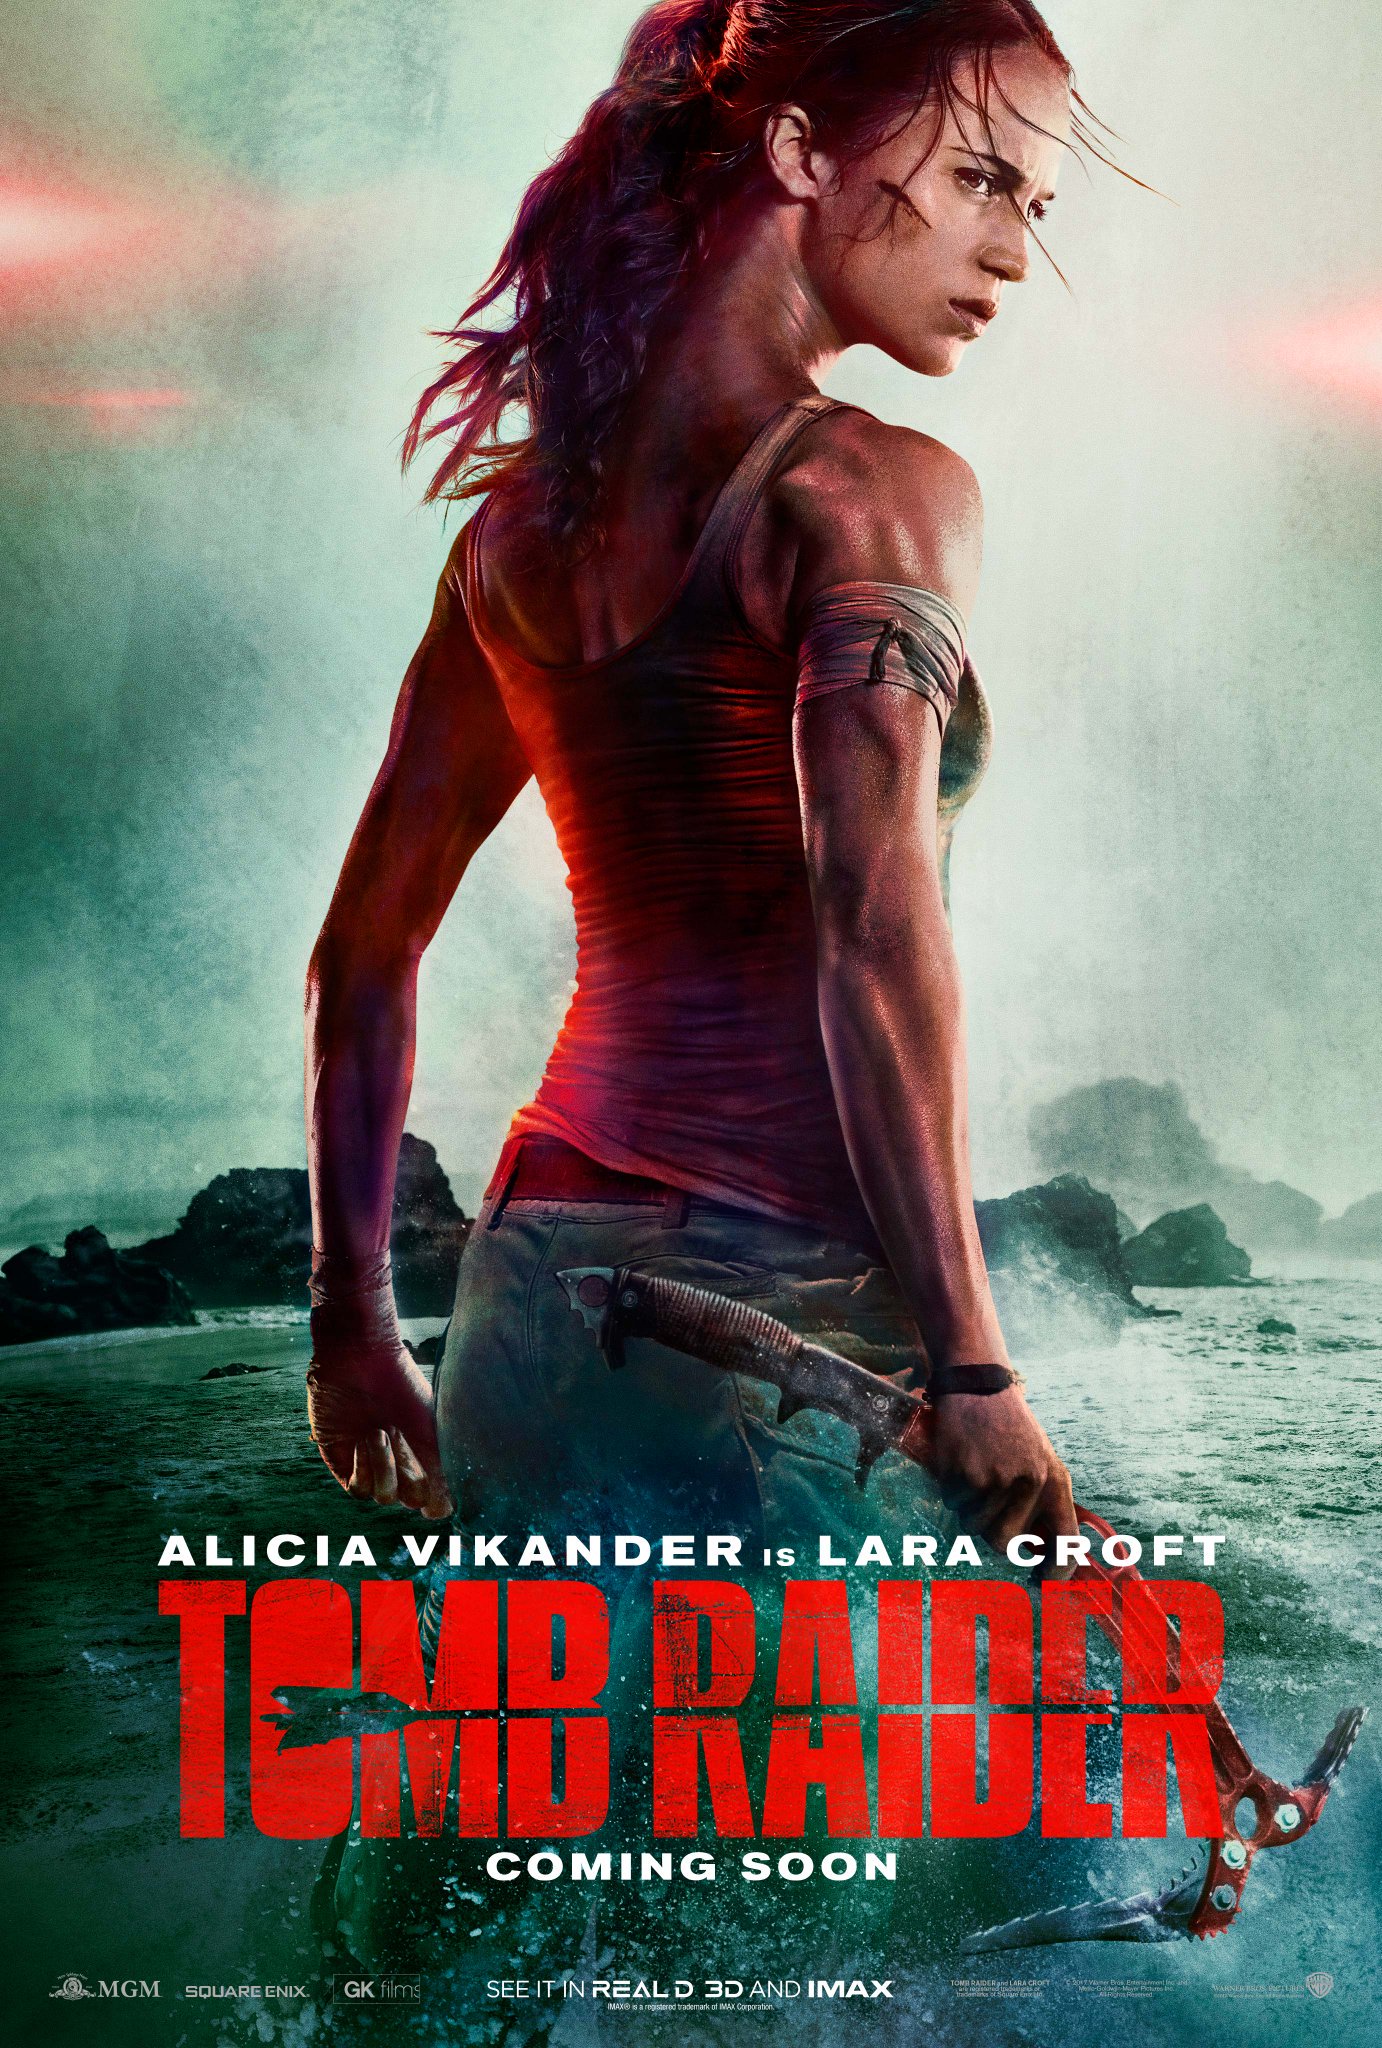 Póster de la película Tomb Raider con Alicia Vikander